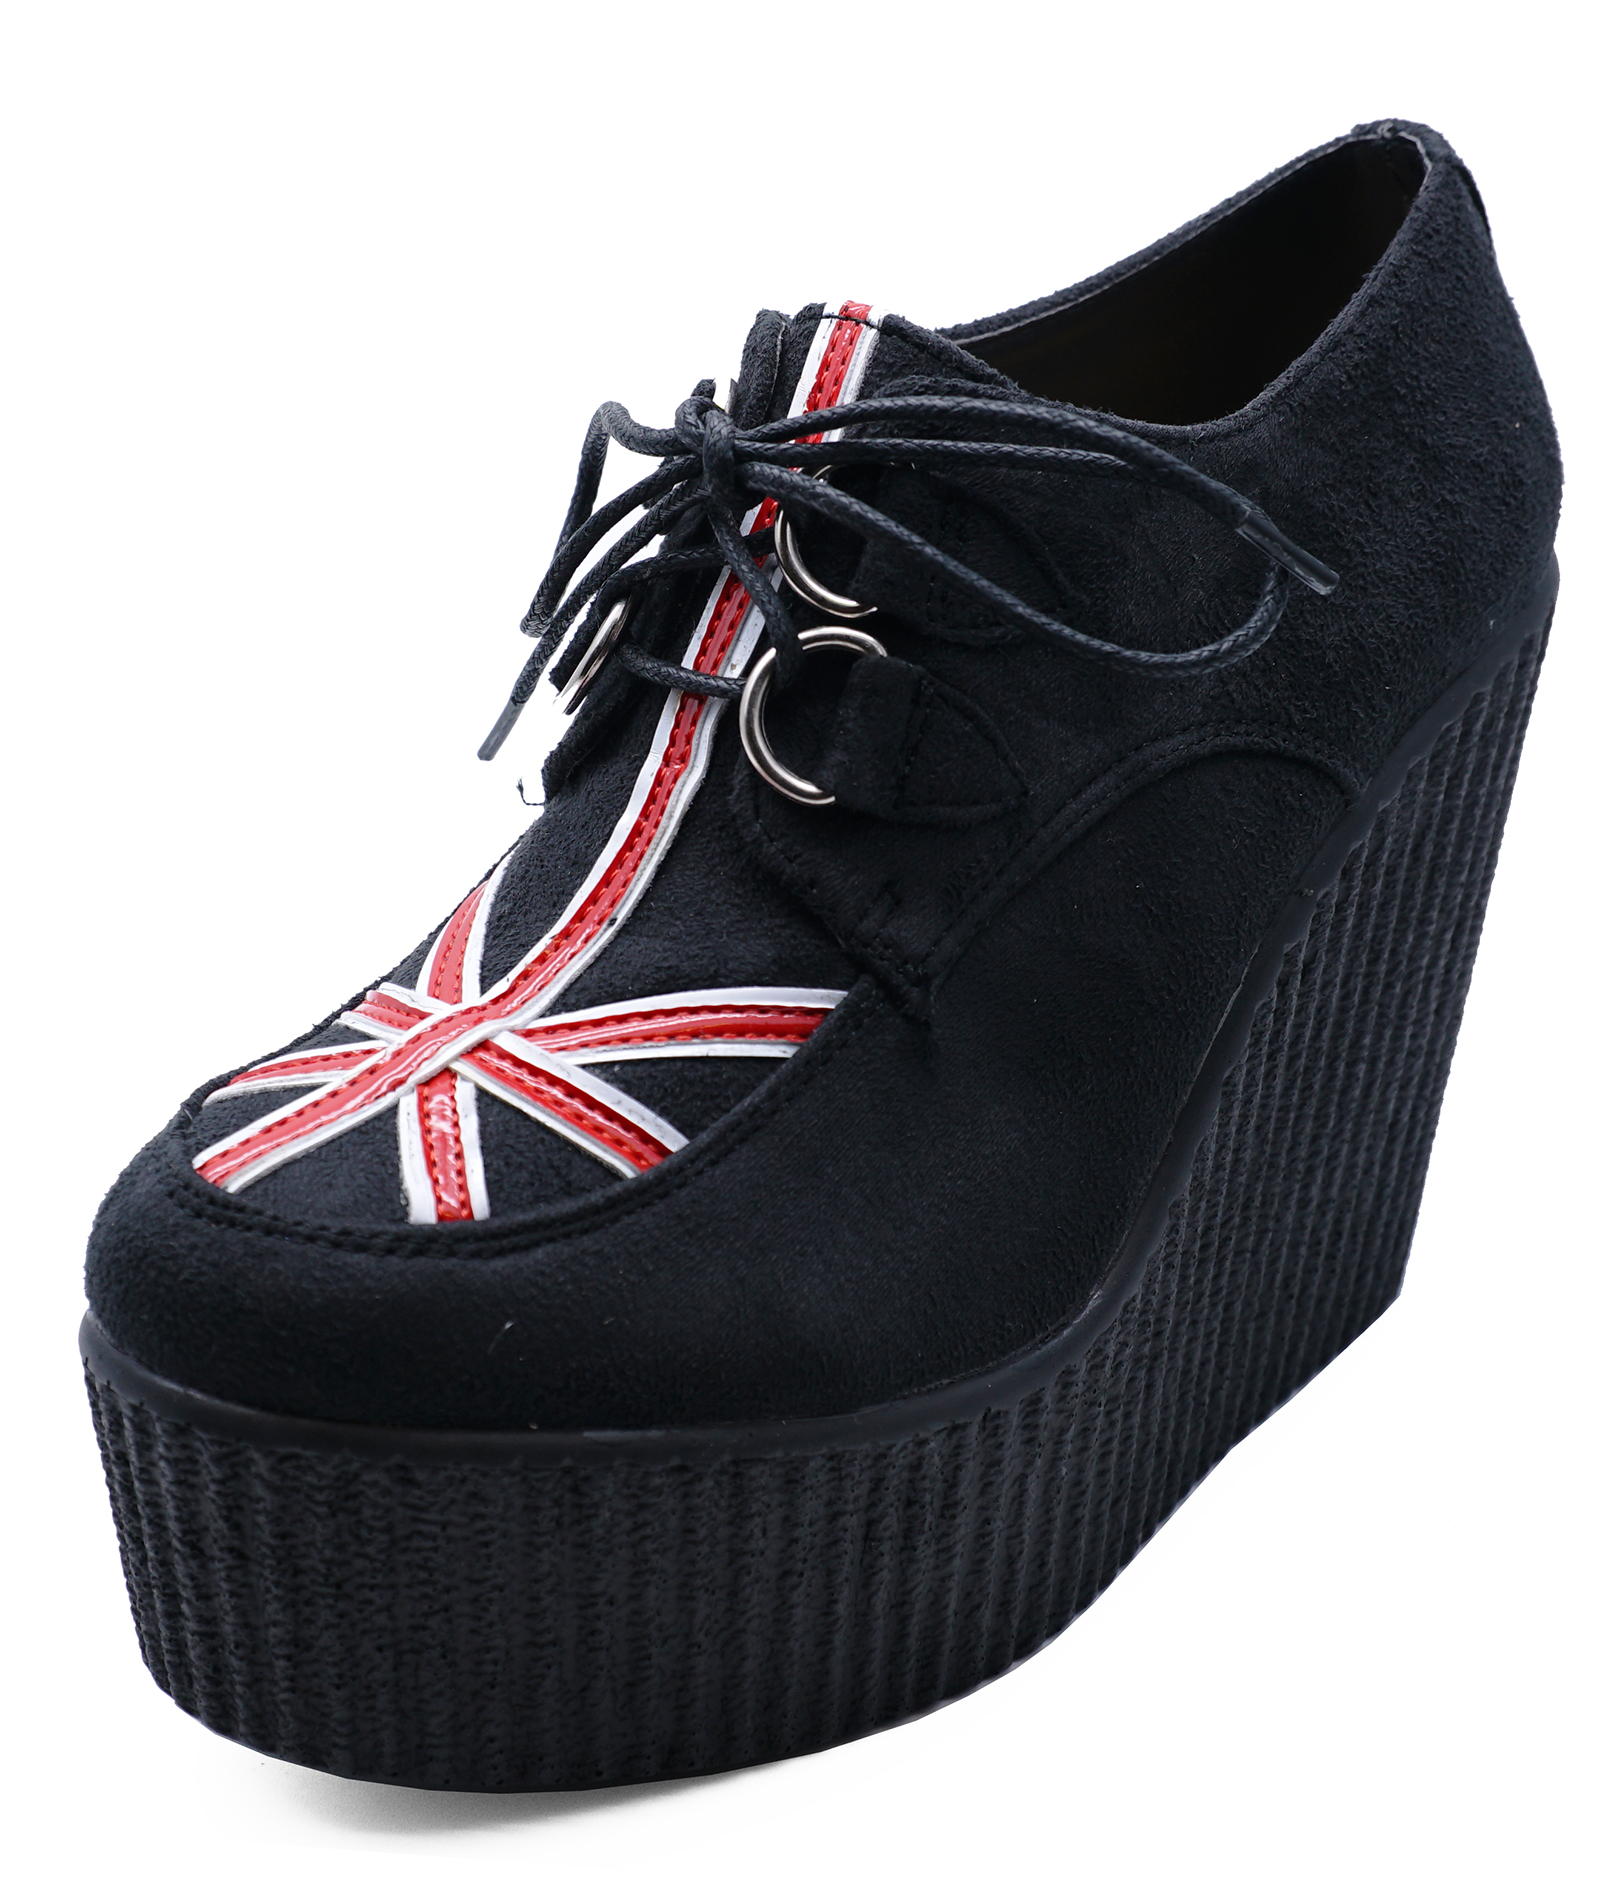 black wedge loafers uk